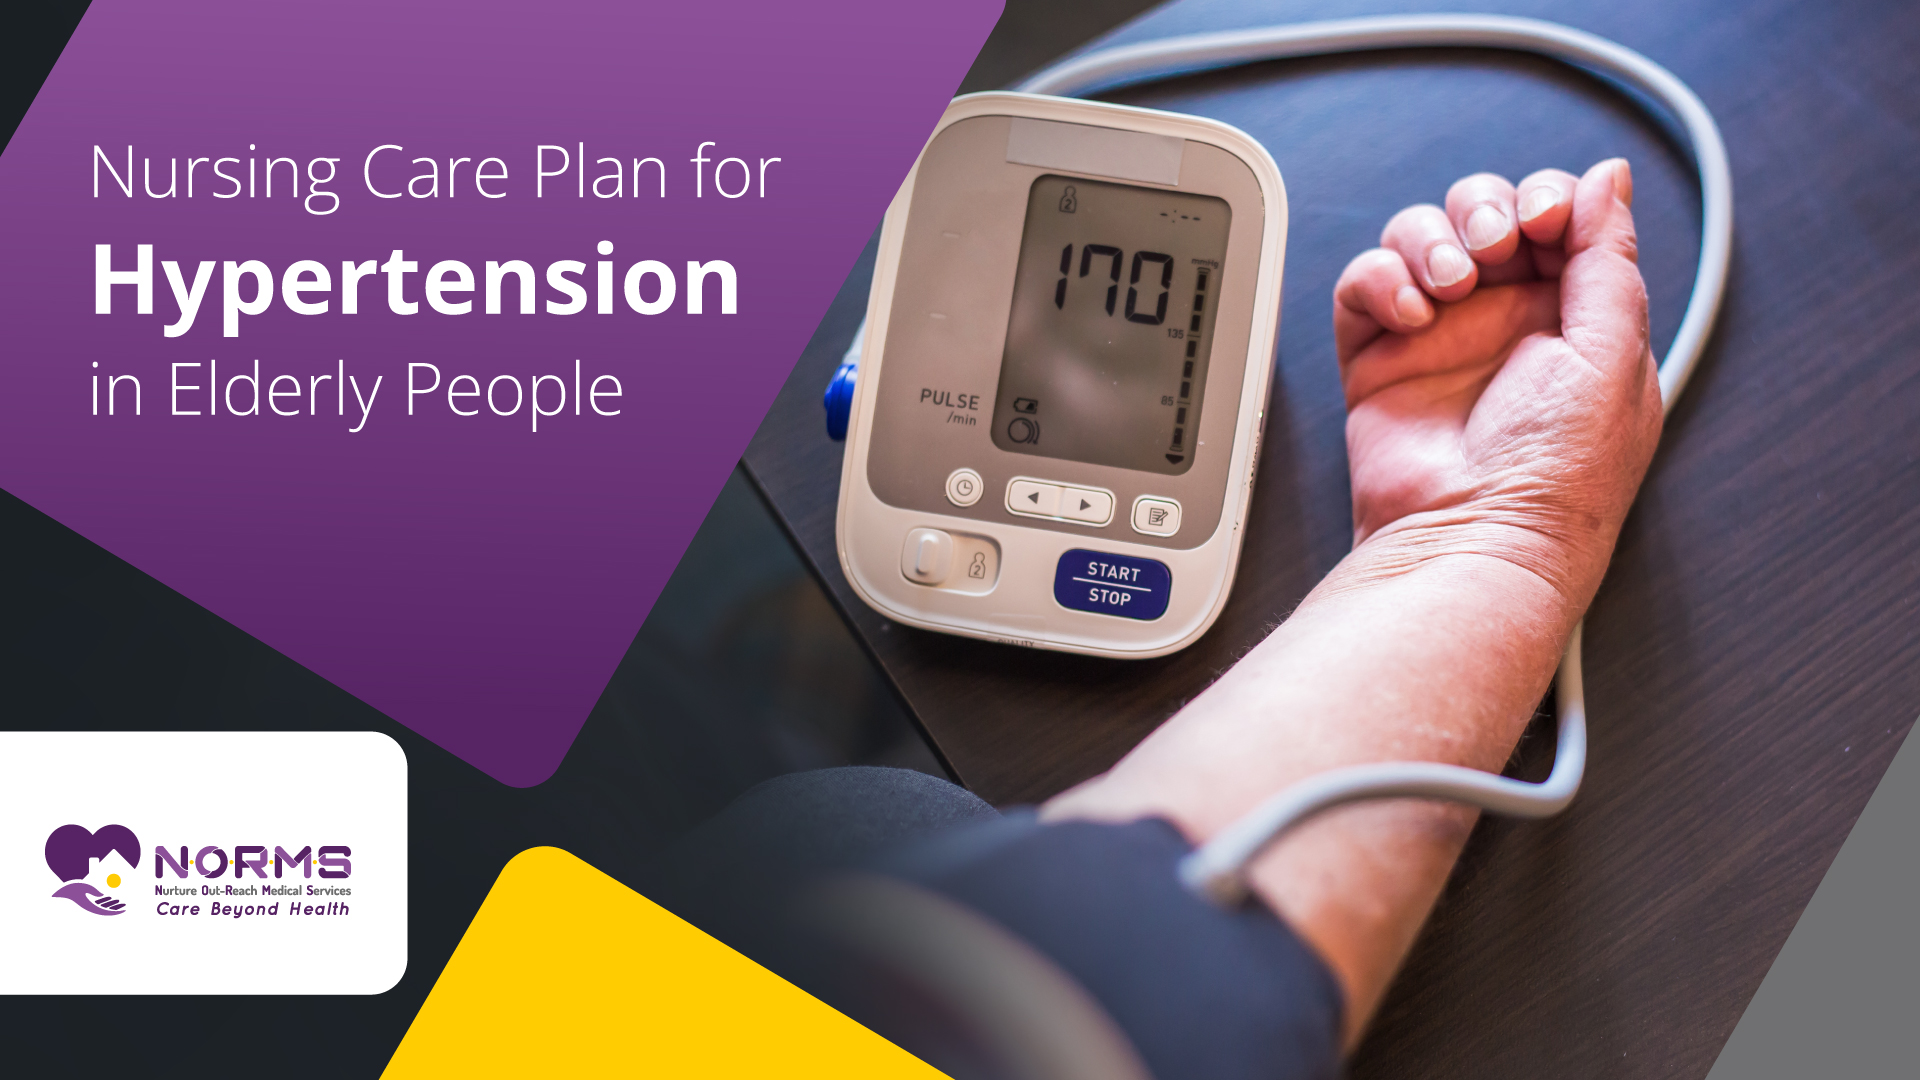 Nursing Care Plan for Hypertension in Aged People